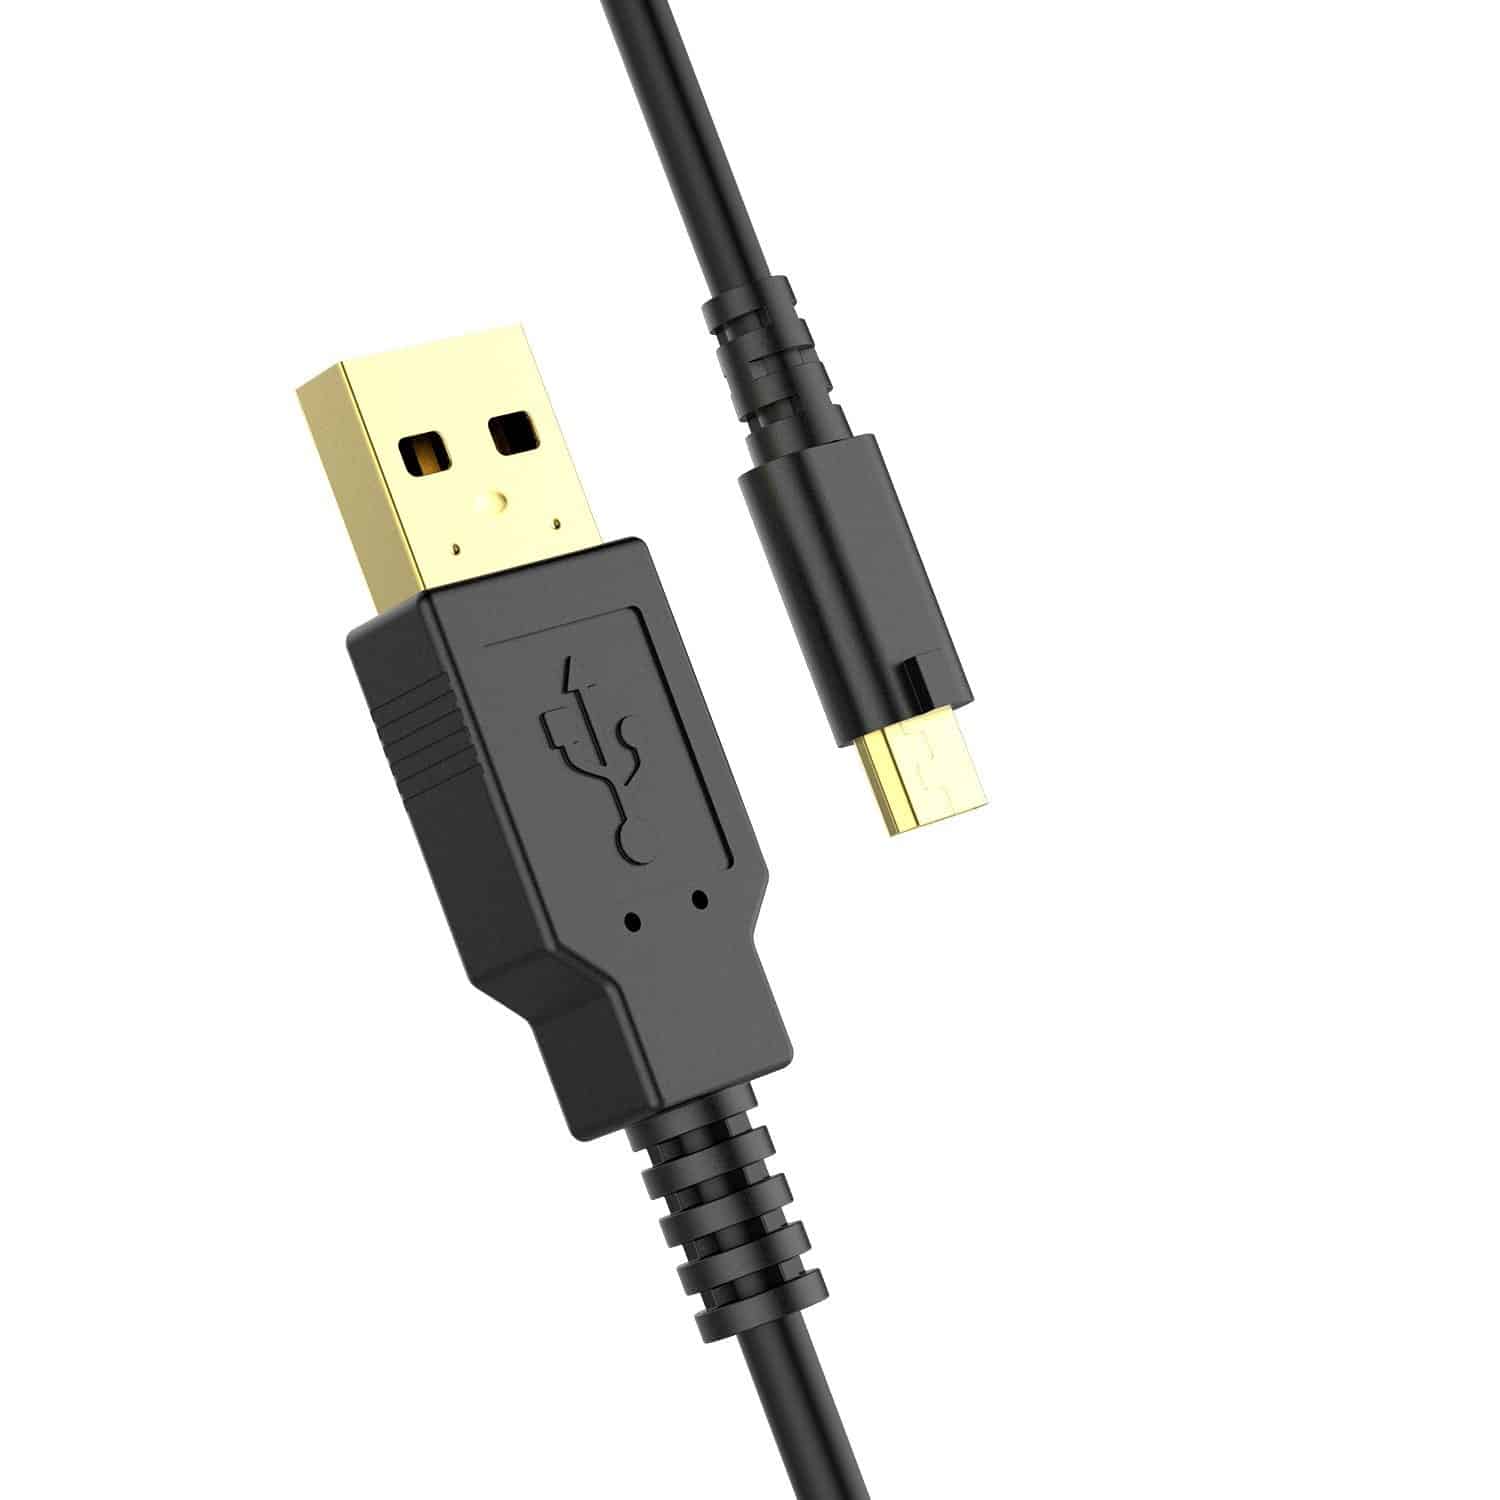 HAVIT CM355 Micro USB Cable, 4.9-Feet, USB 2.0